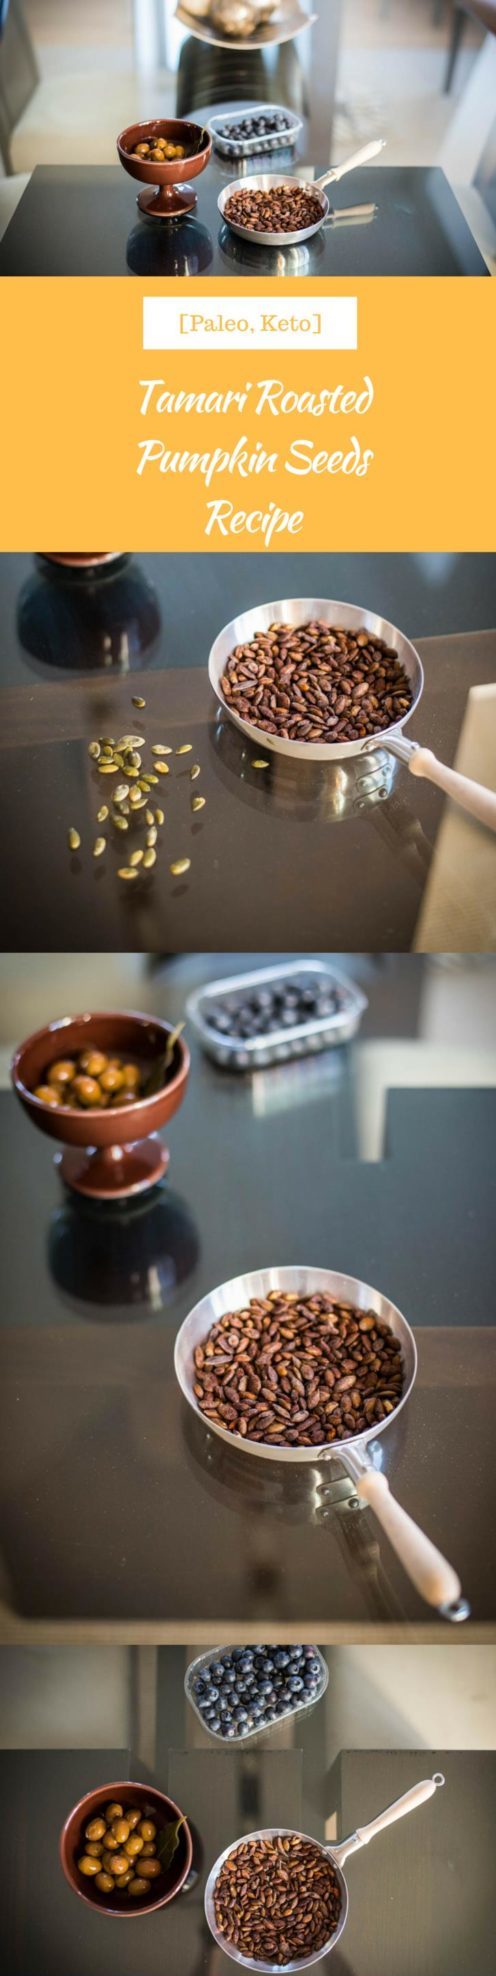 Tamari Roasted Pumpkin Seeds Recipe [Paleo, Keto] #paleo #recipe #keto - https://paleoflourish.com/tamari-roasted-pumpkin-seeds-recipe